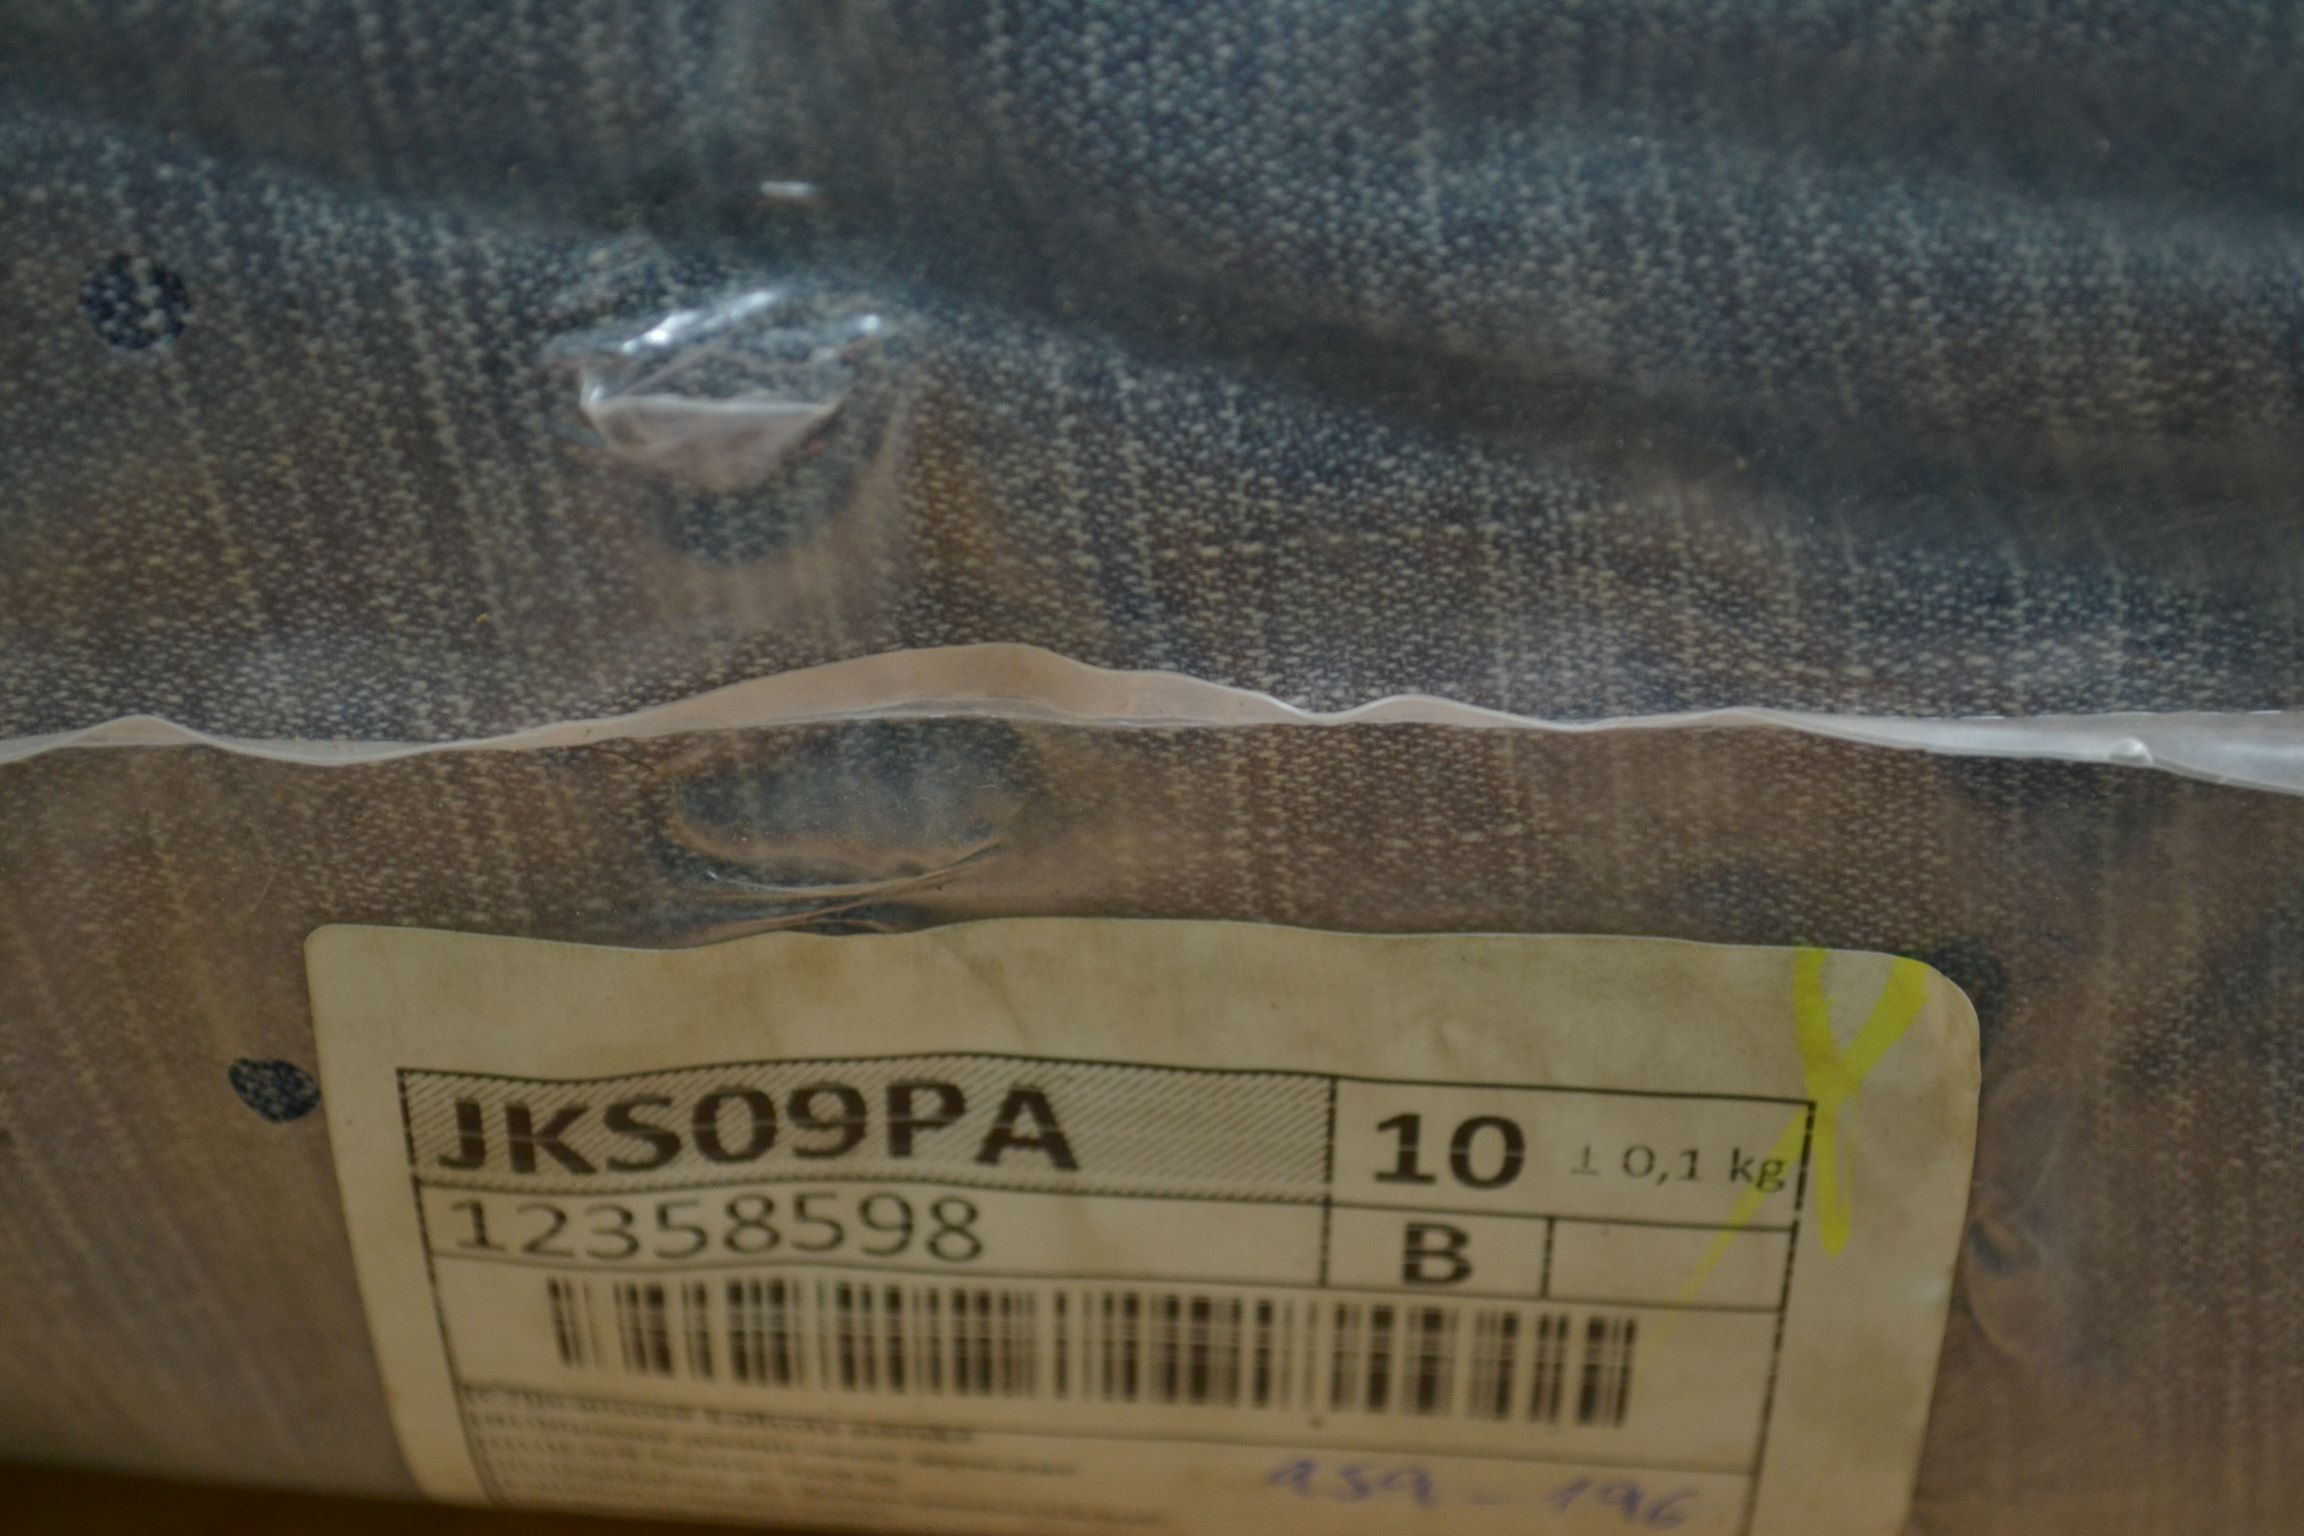 JKS09PA; Джинсовые мужские брюки; код мешка 12358598